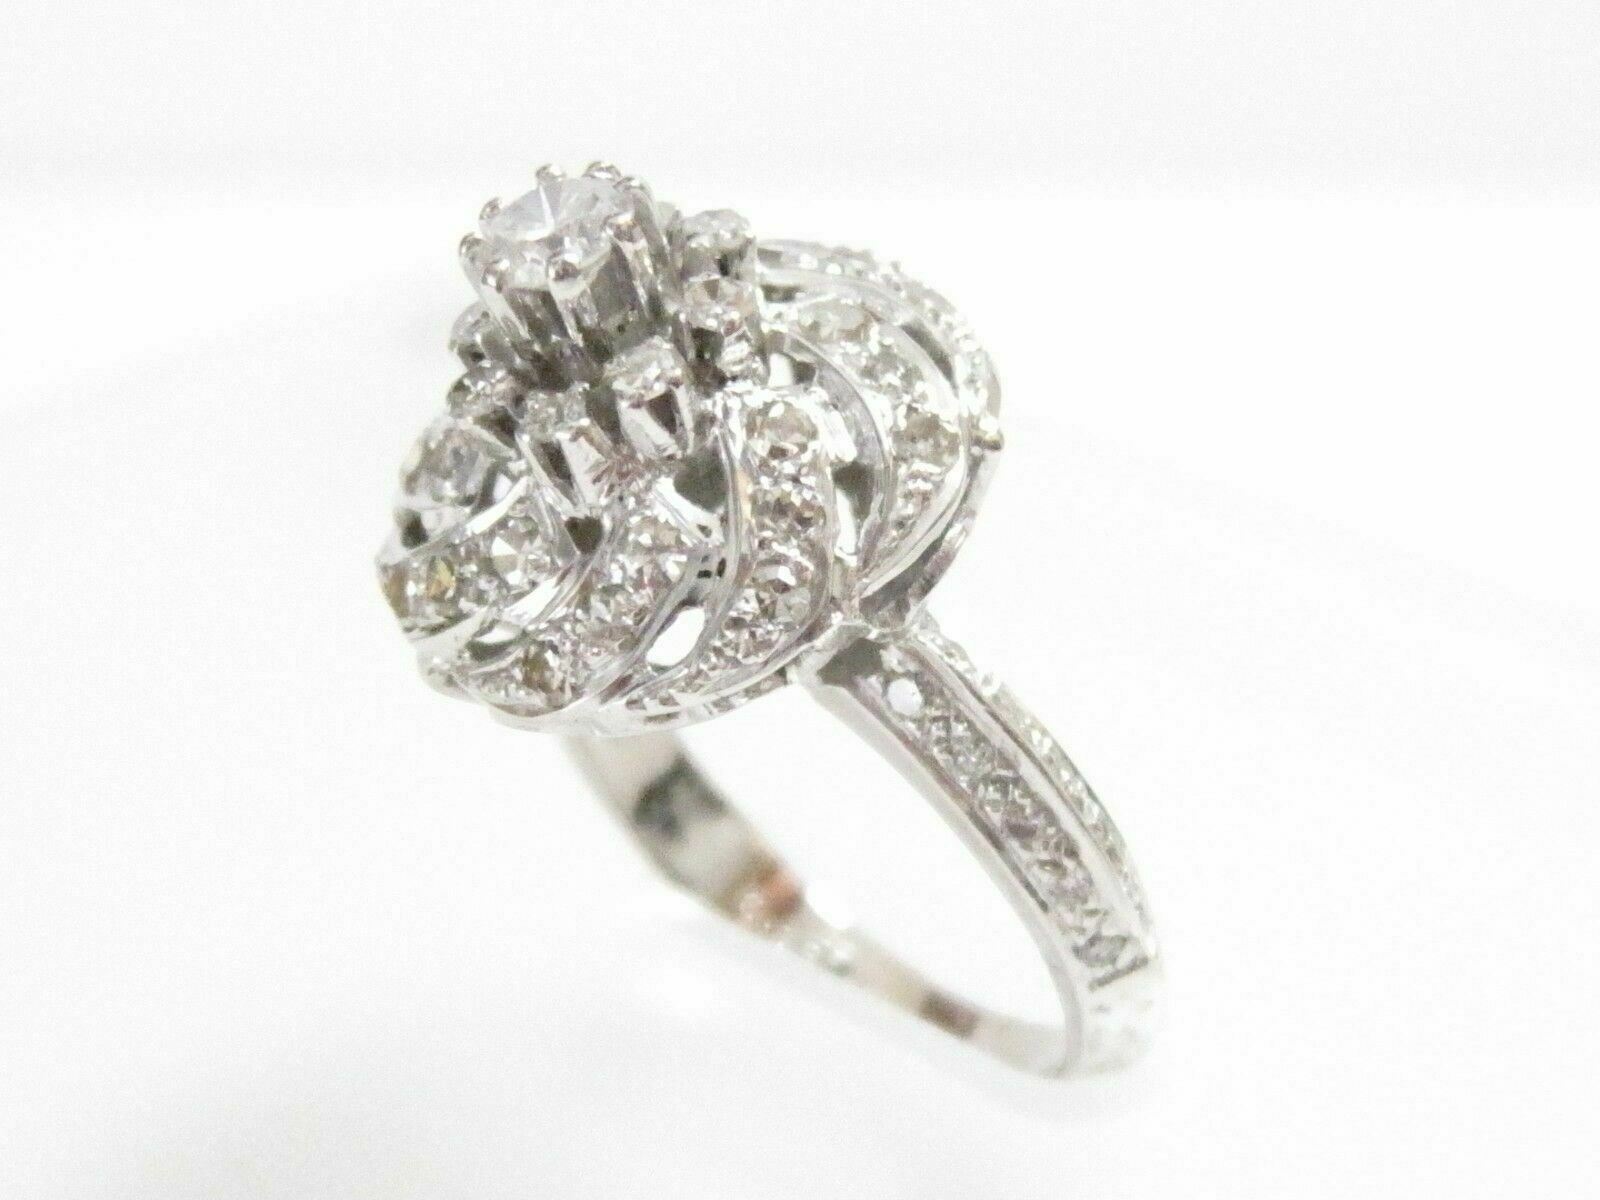 FINE Round Diamond Ring Antique Inspired 14kt White Gold